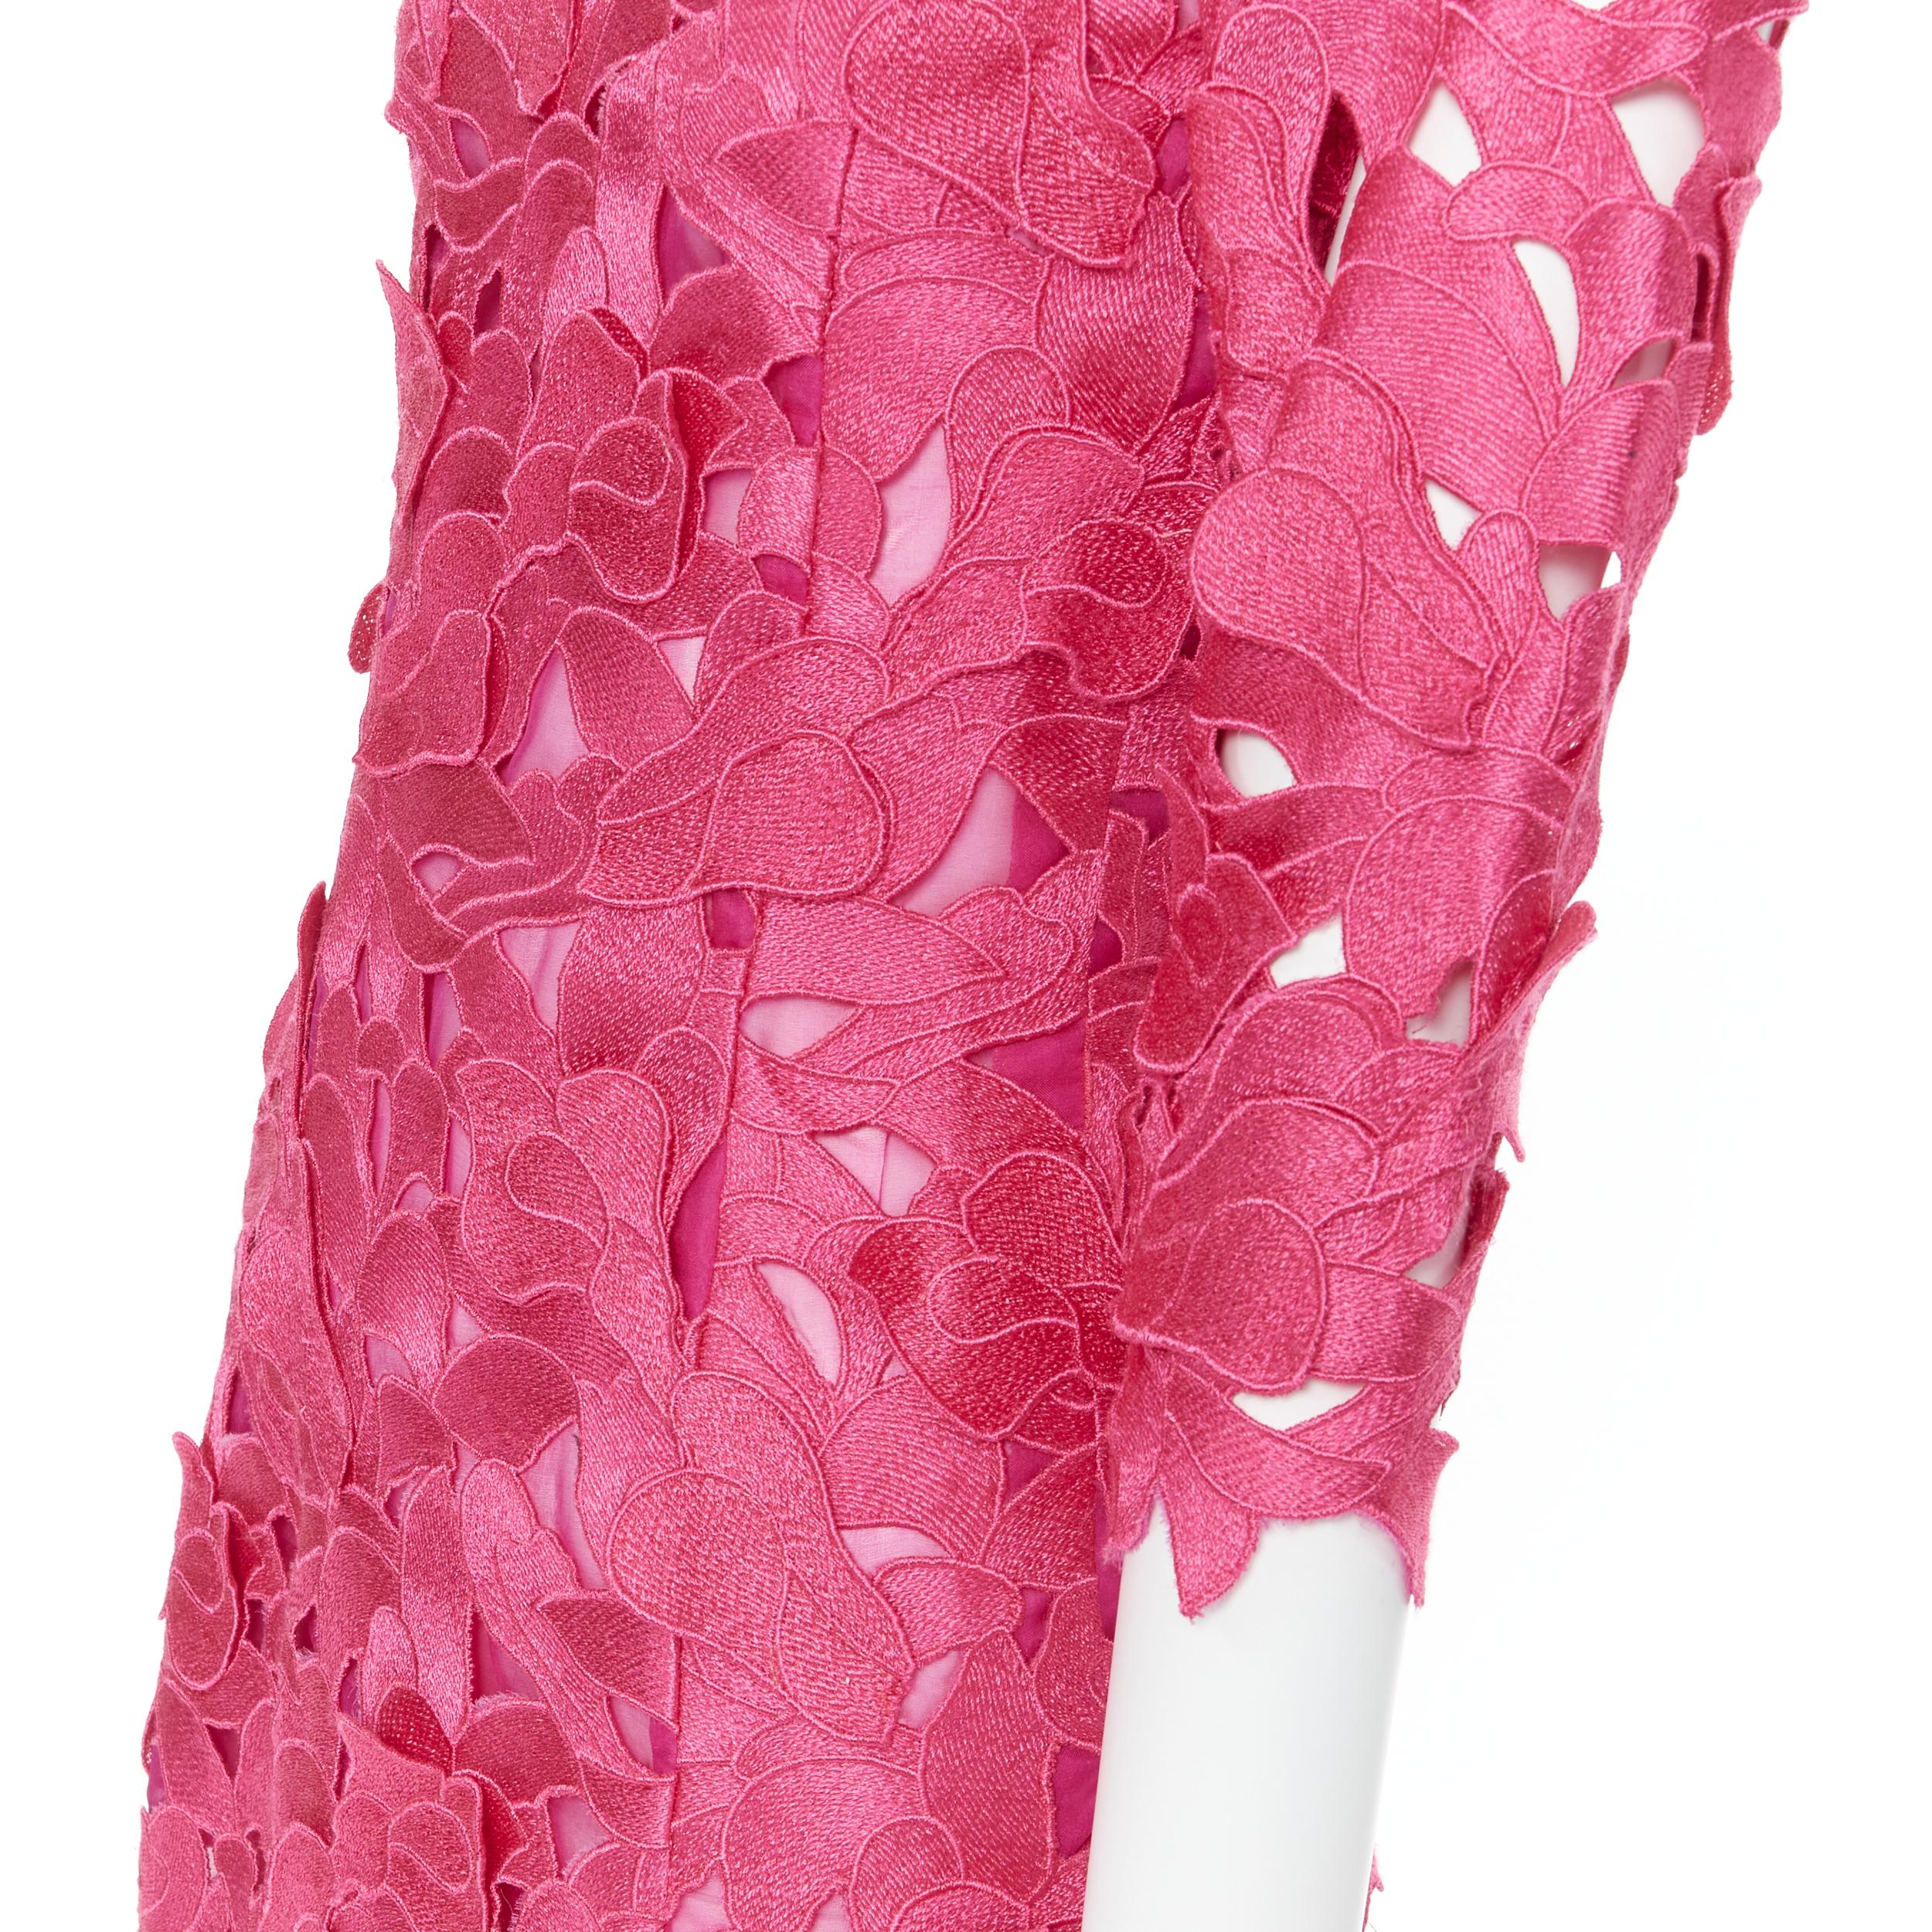 OSCAR DE LA RENTA fuchsia pink floral print 3/4 sleeve cocktail dress XS 1